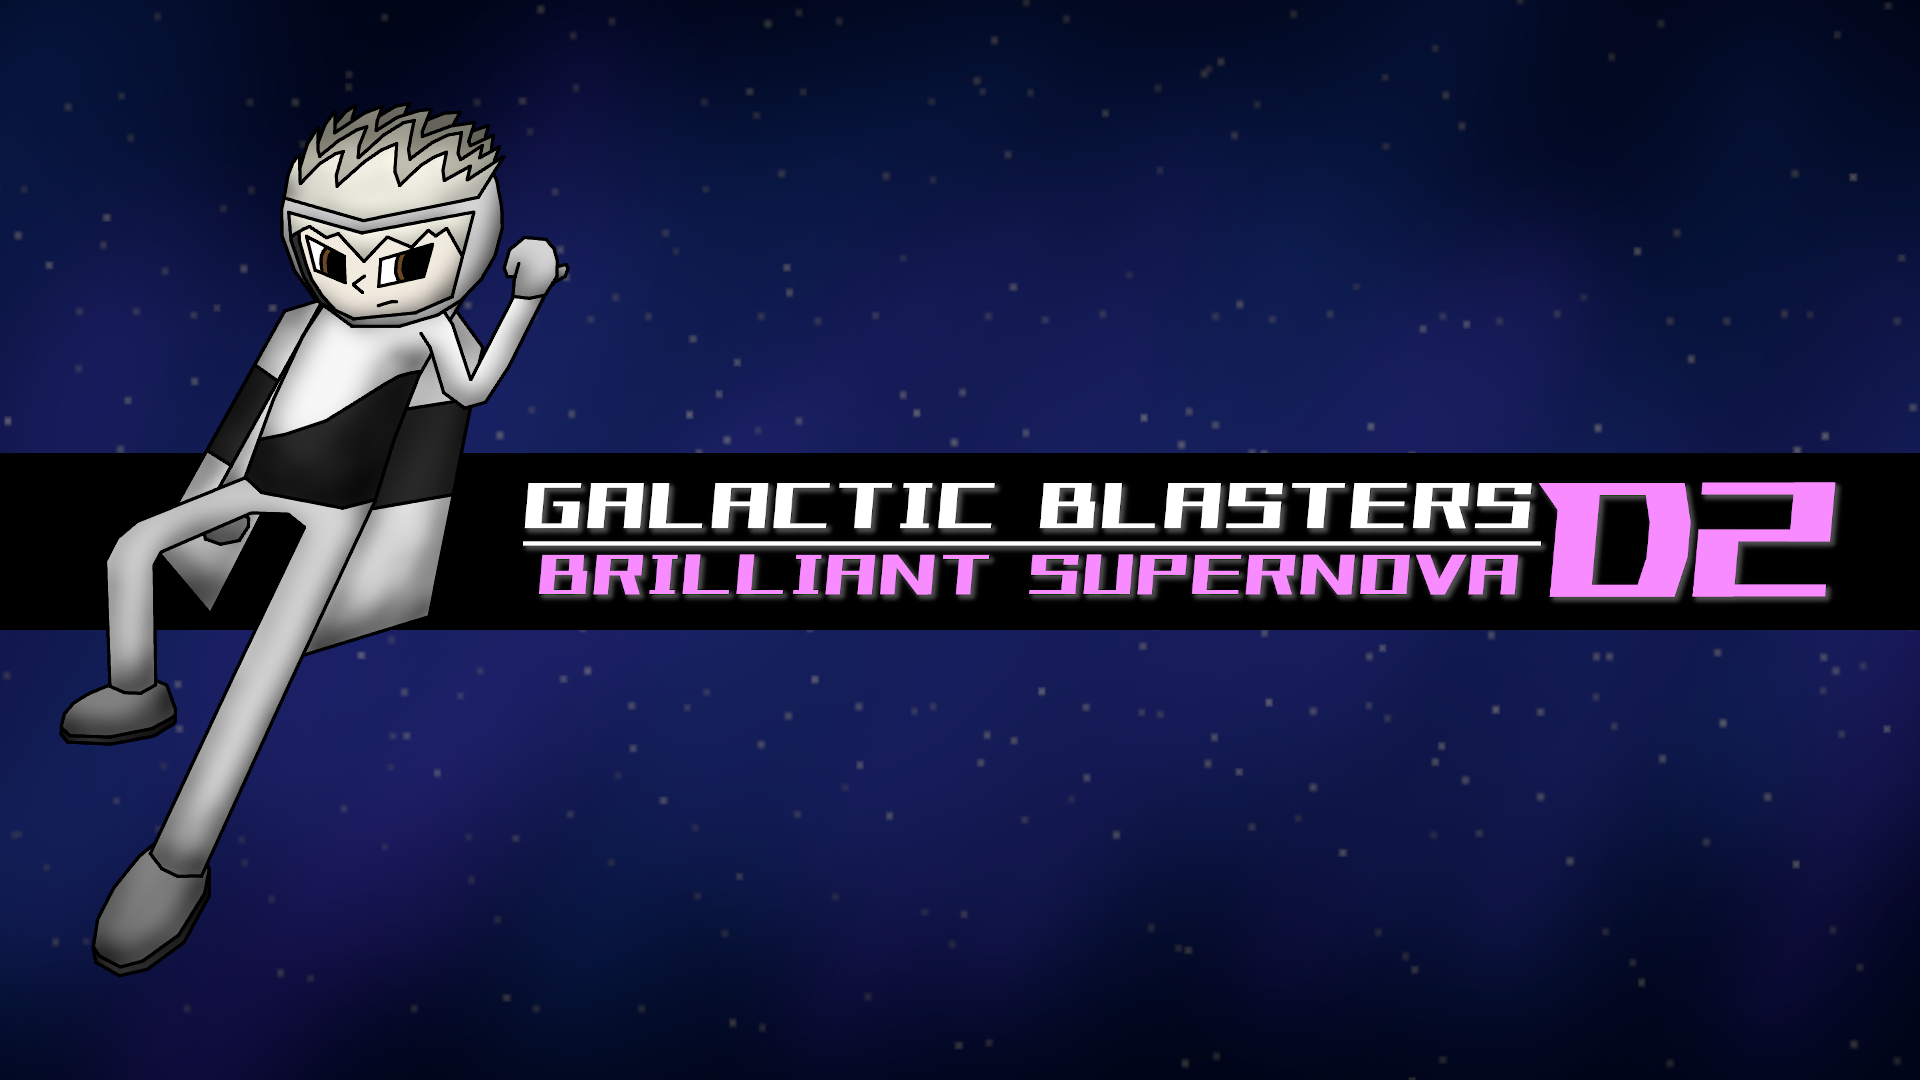 Galactic Blasters D2 - Brilliant Supernova [The Trial]